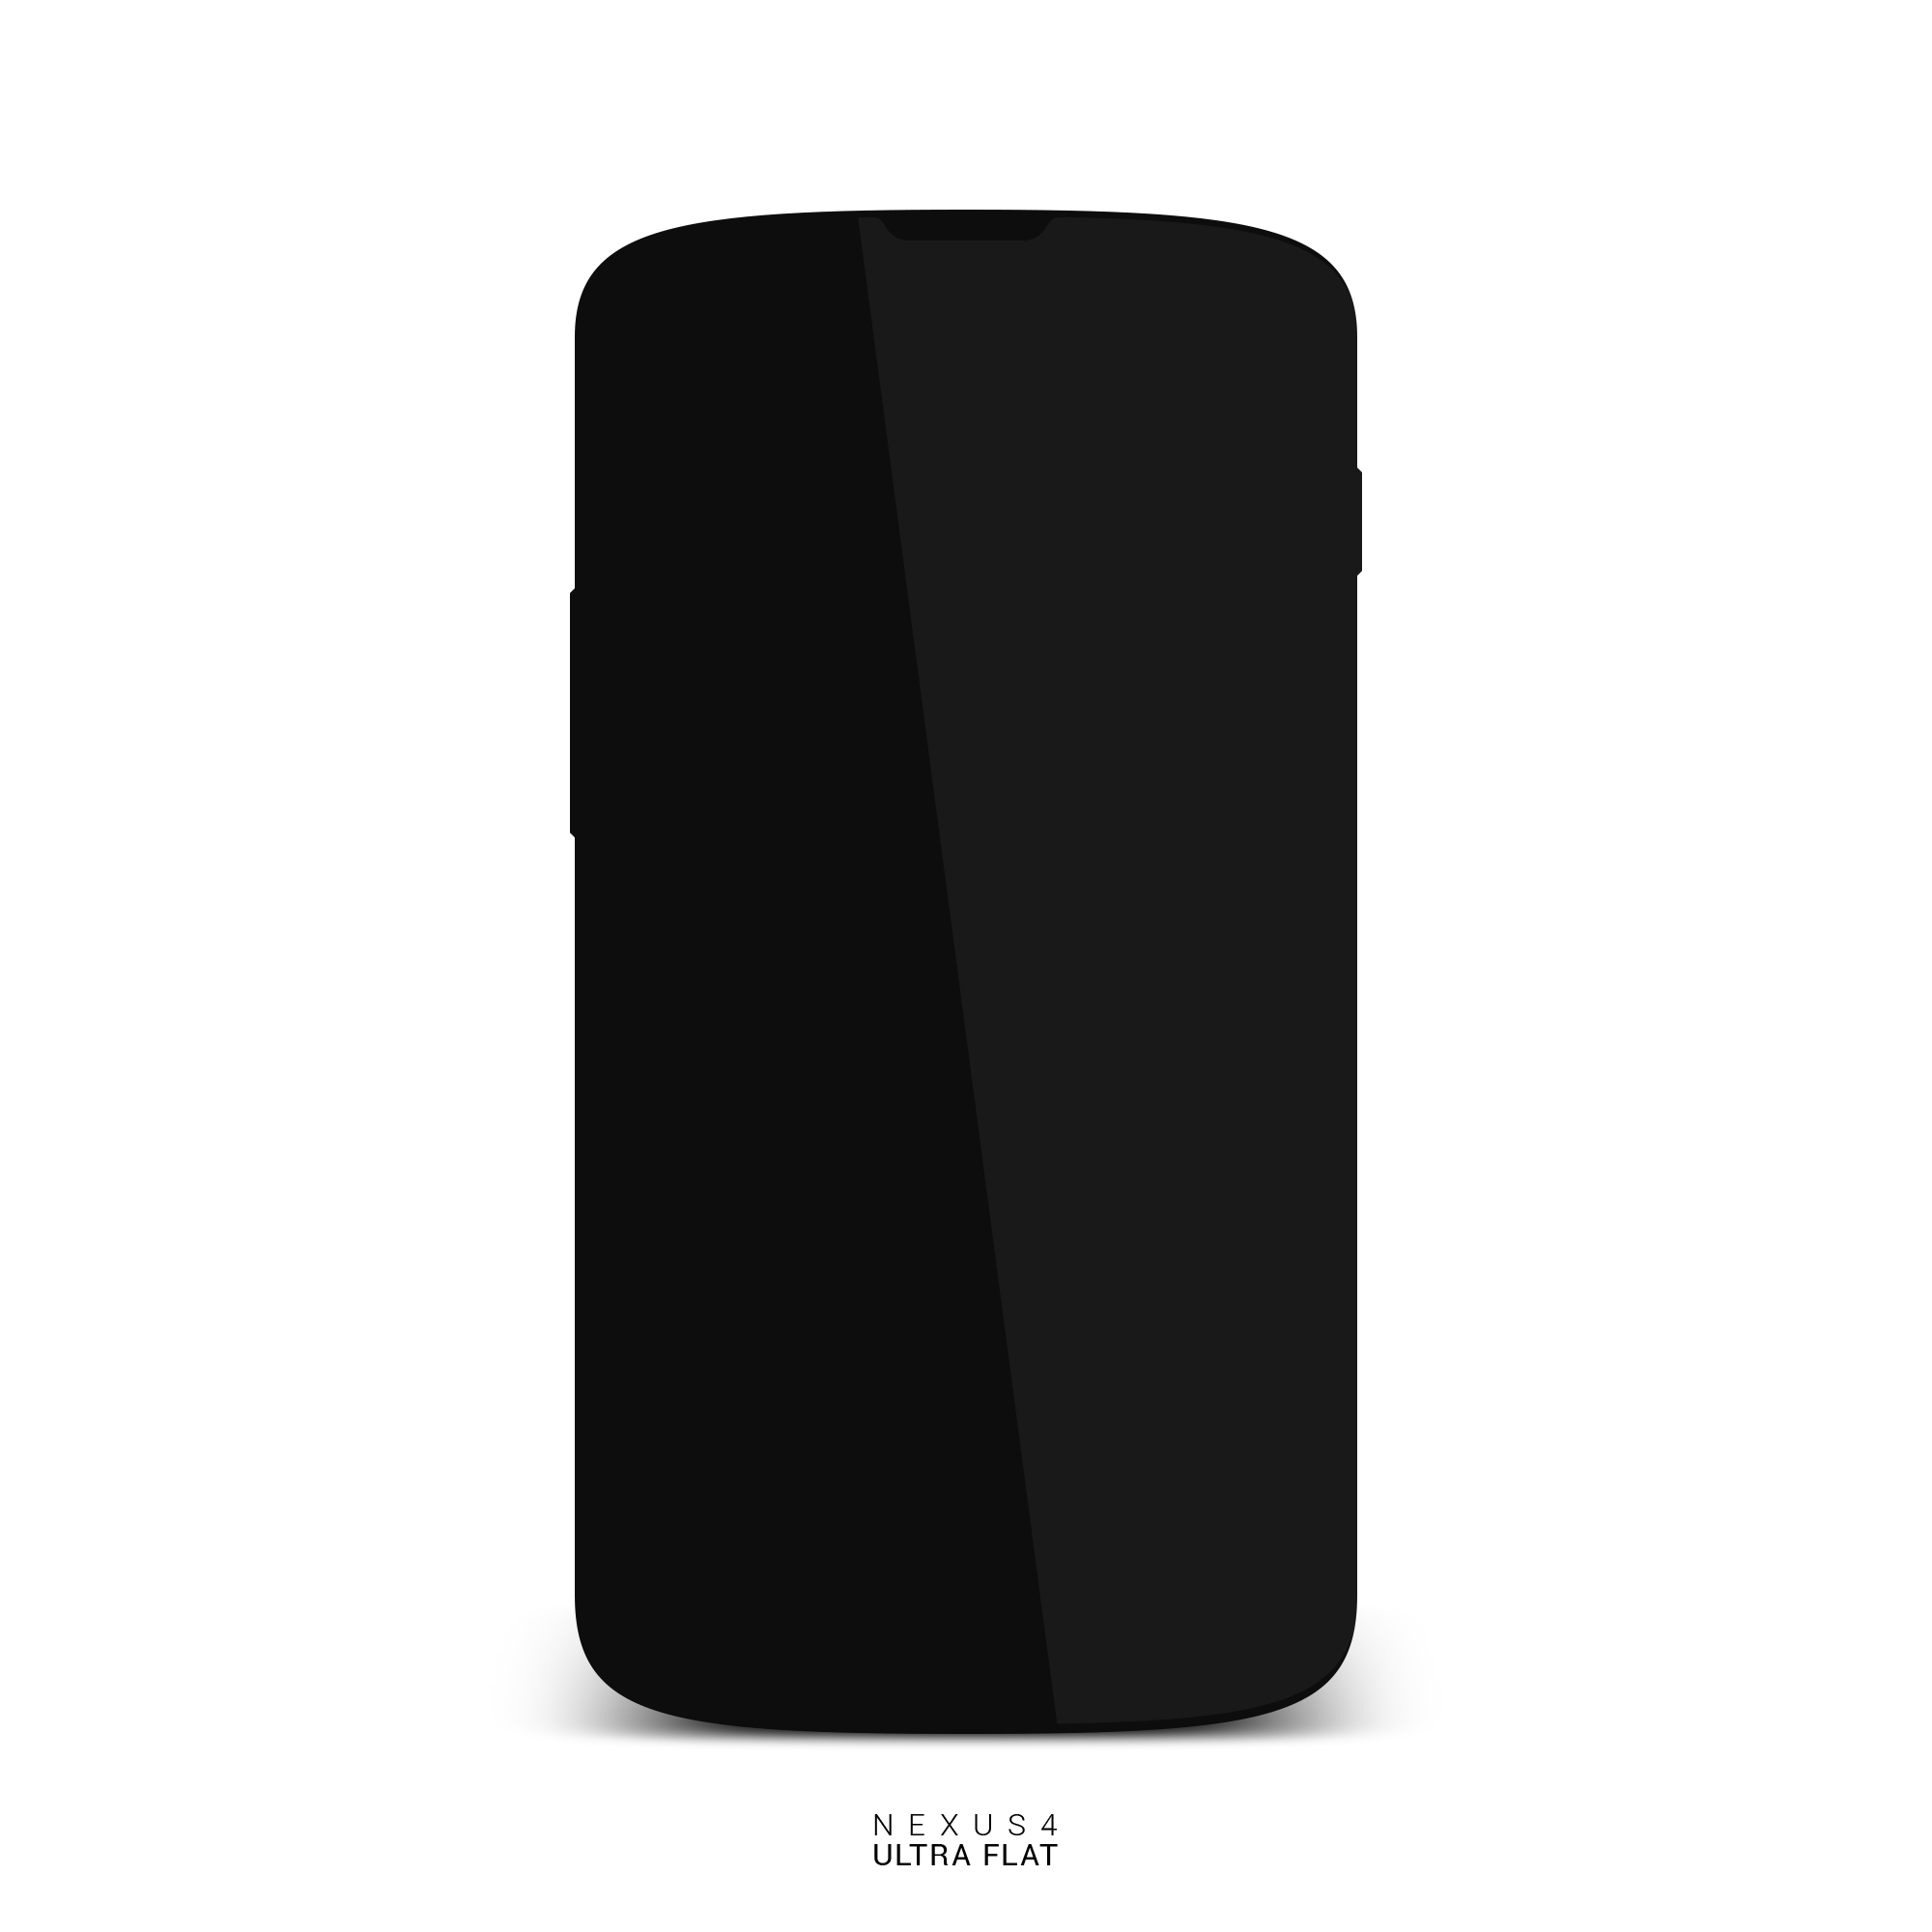 Nexus 4 Ultra Flat PSD